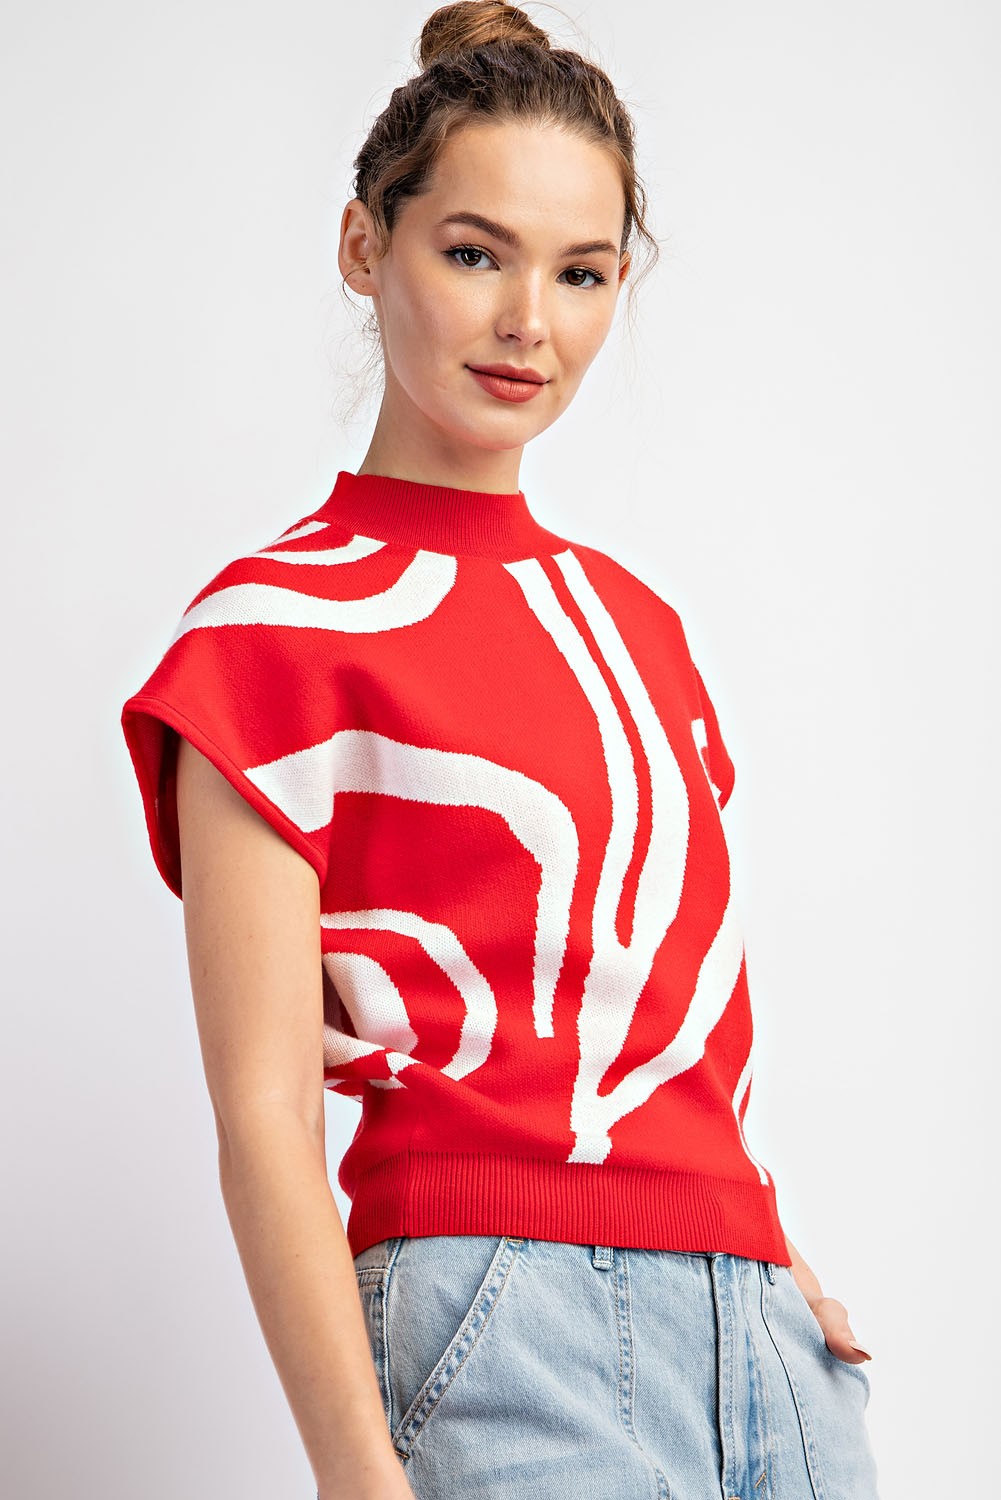 Missy Red Swirl Sweater Top